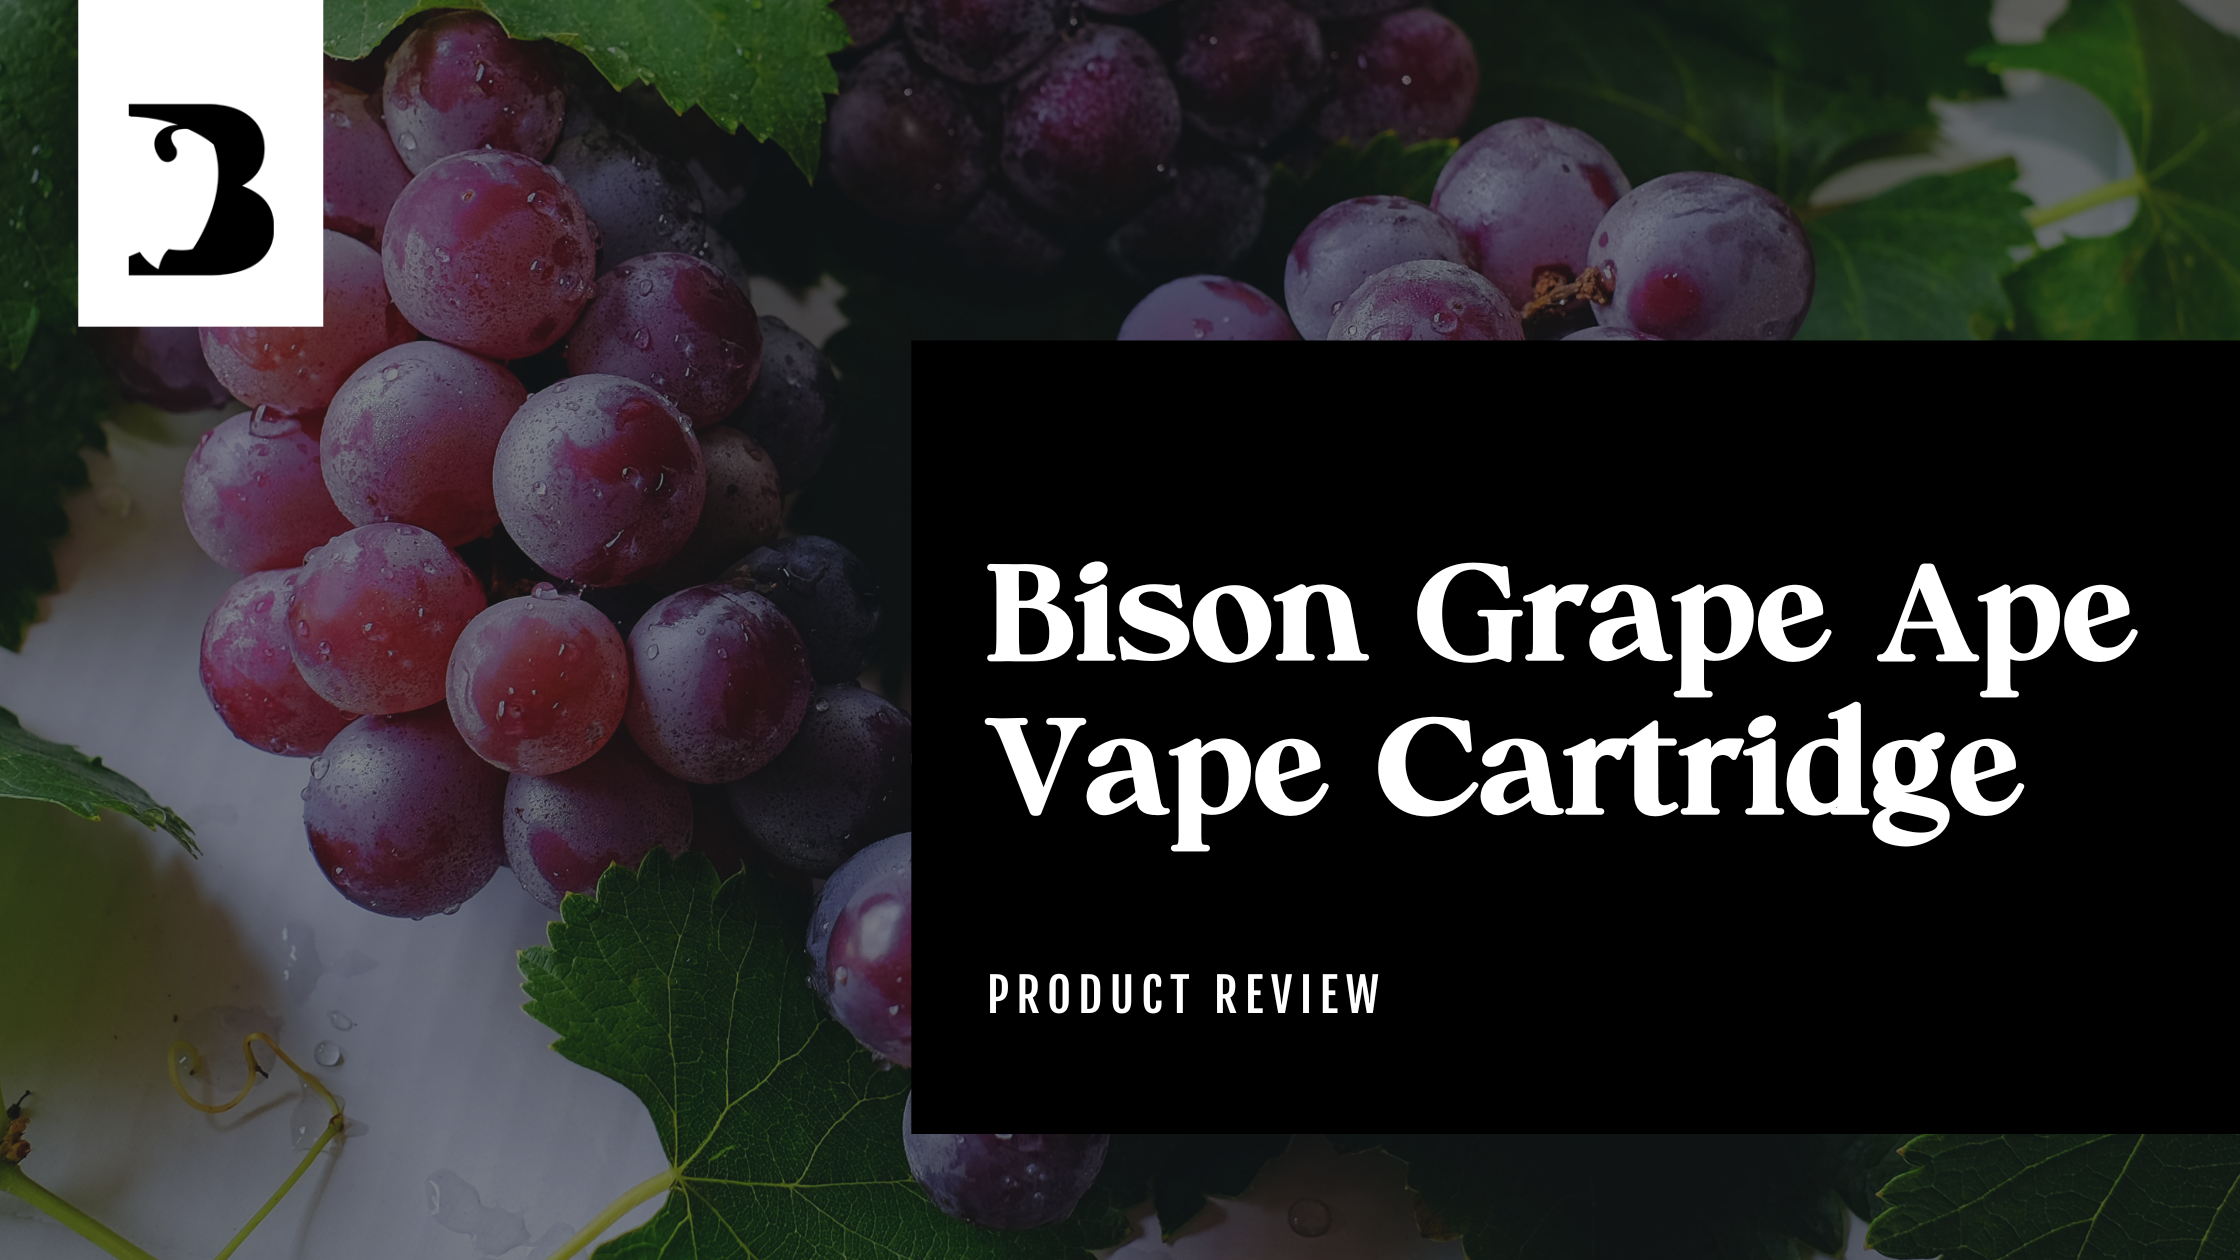 Bison Grape Ape Vape Cartridge